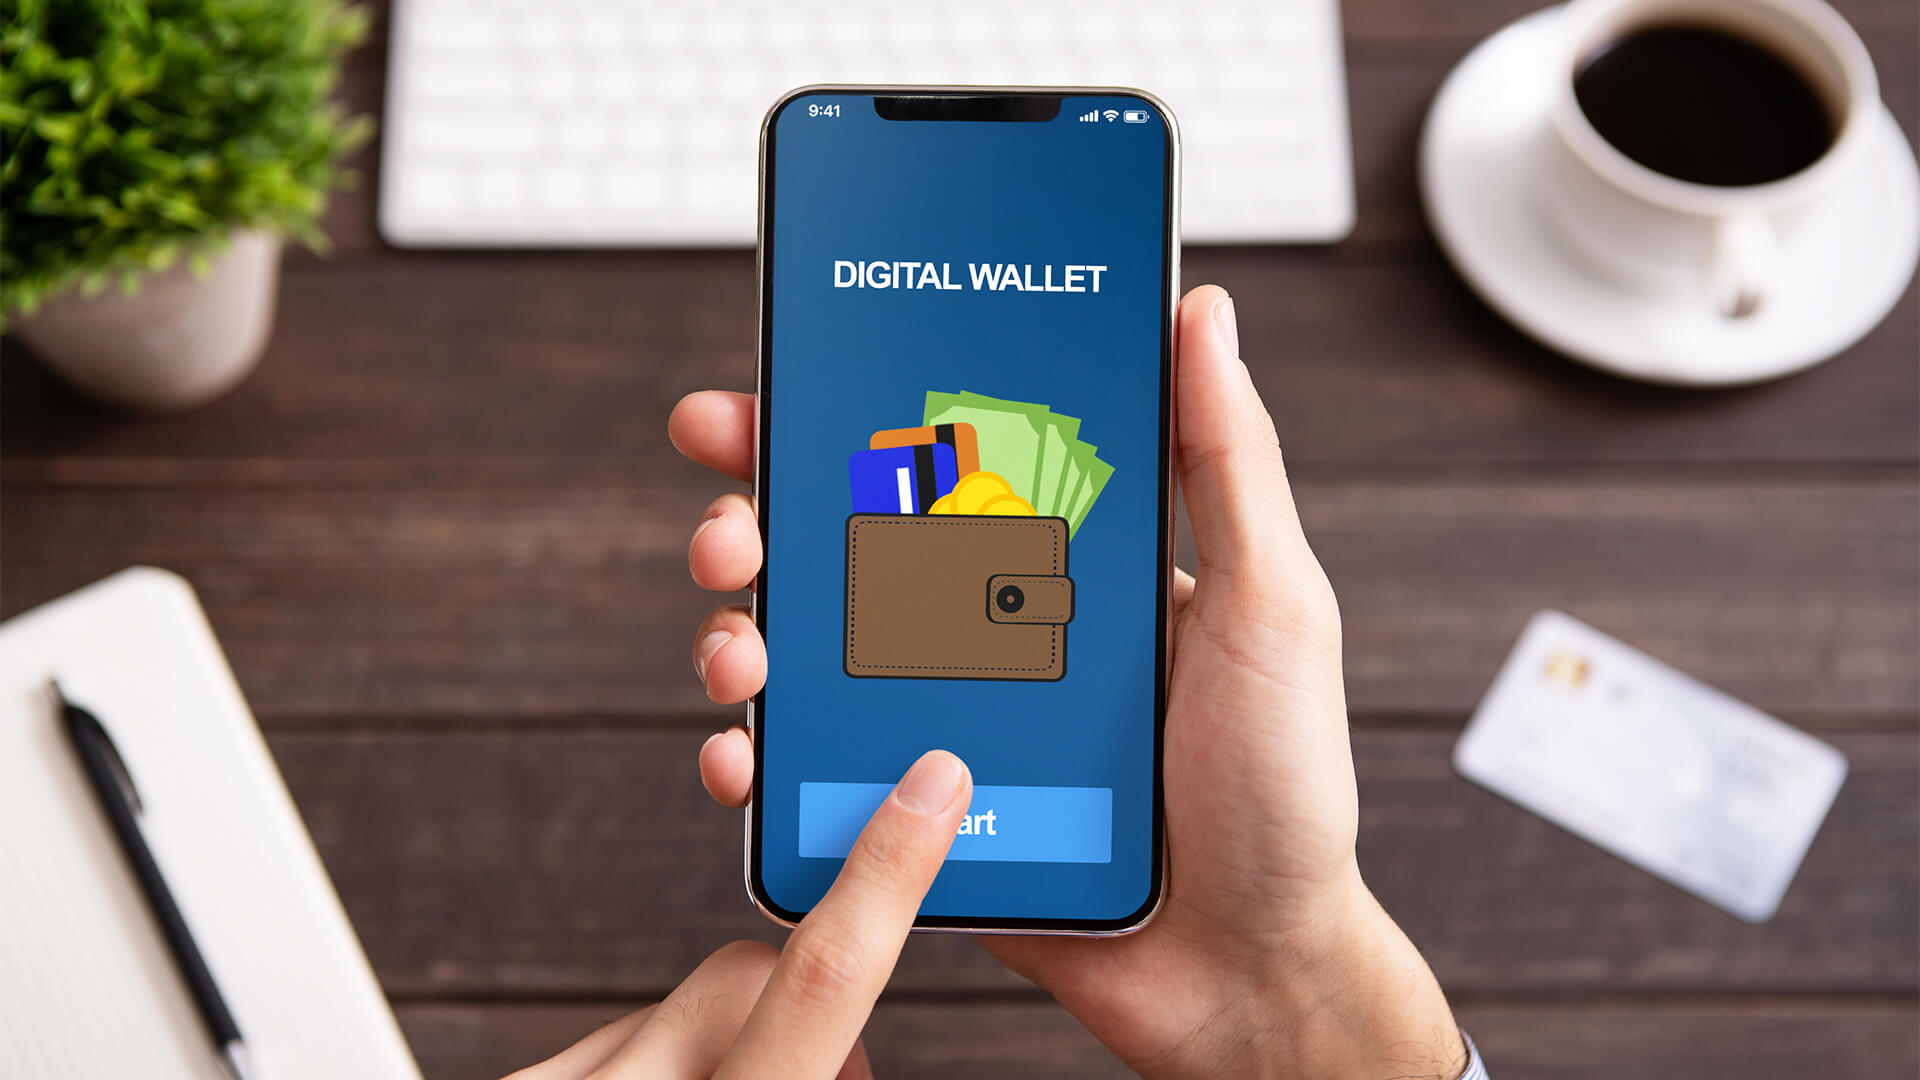 Digital Wallets